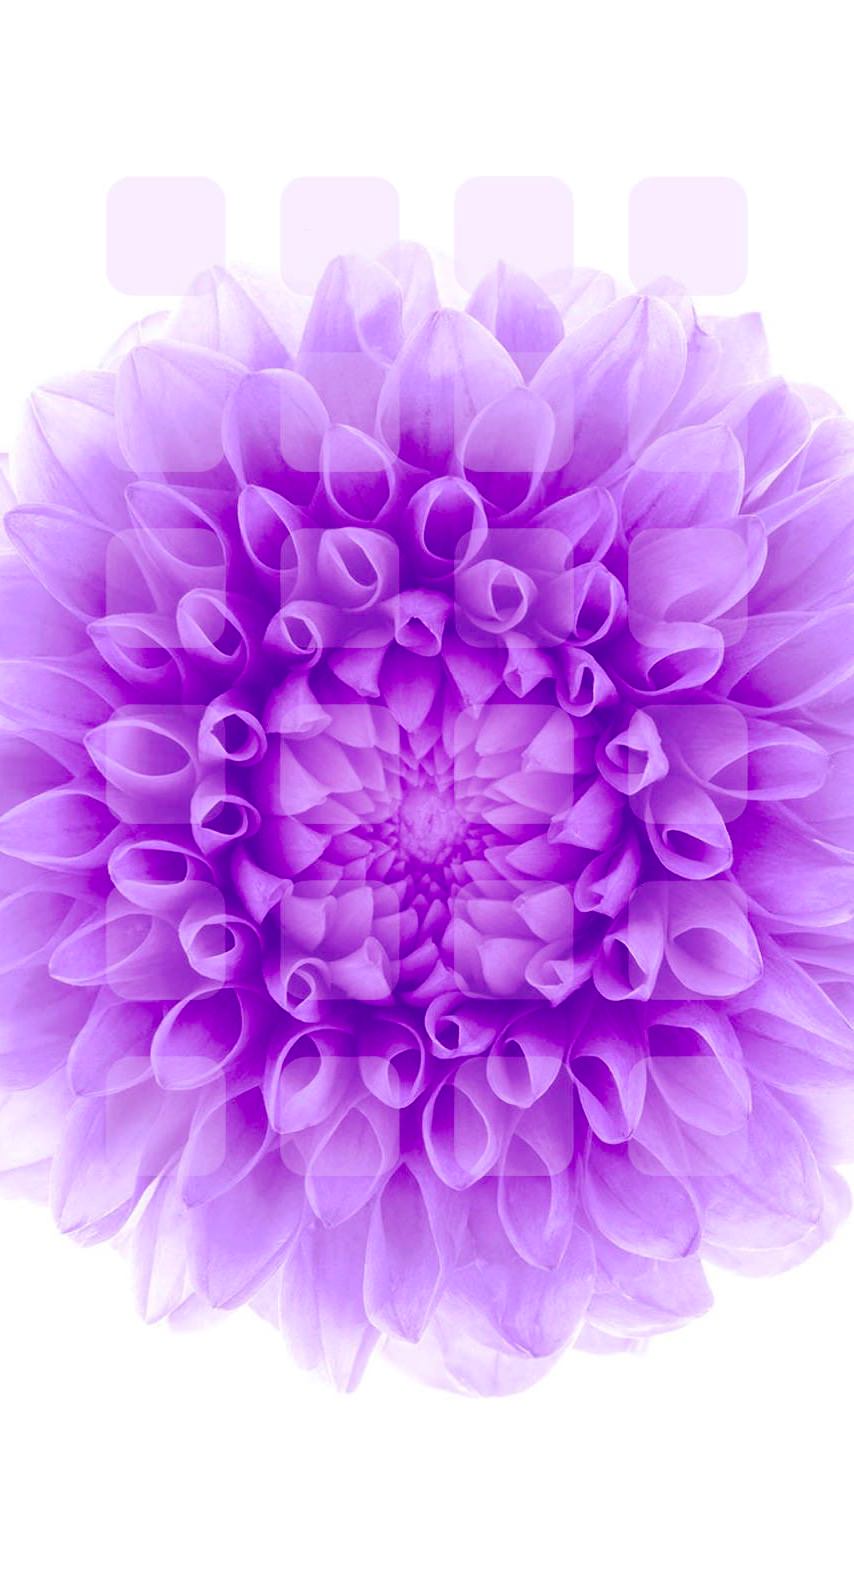 Estanteria De Flores Purpura Blanca Wallpaper Sc Iphone7